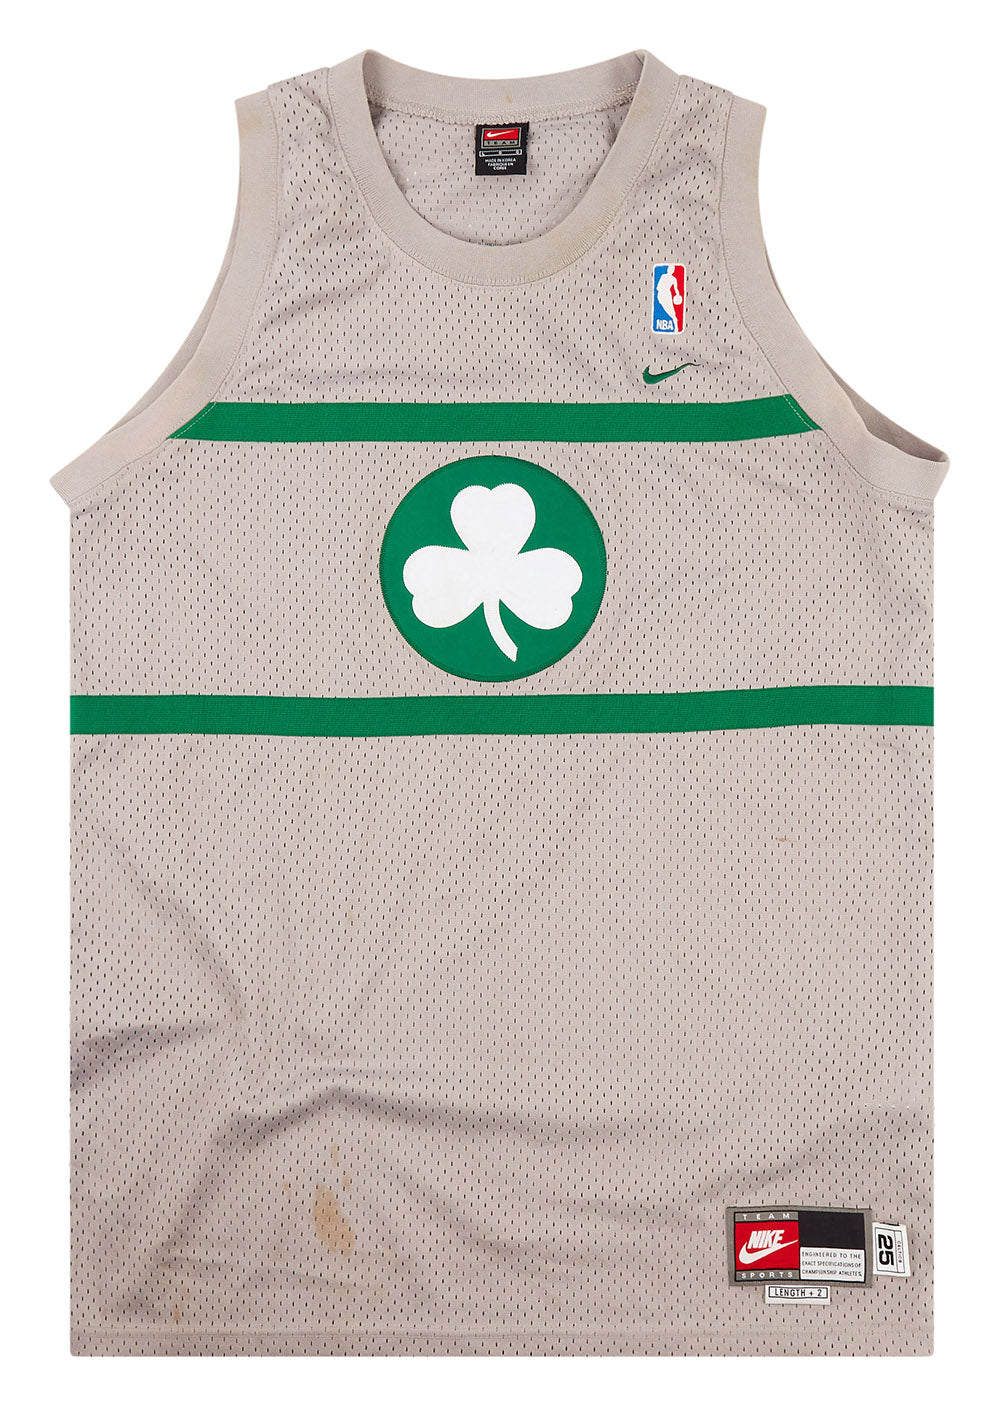 Boston Celtics Paul Pierce Jersey Vintage Nike NBA Basketball Shirt size XXL